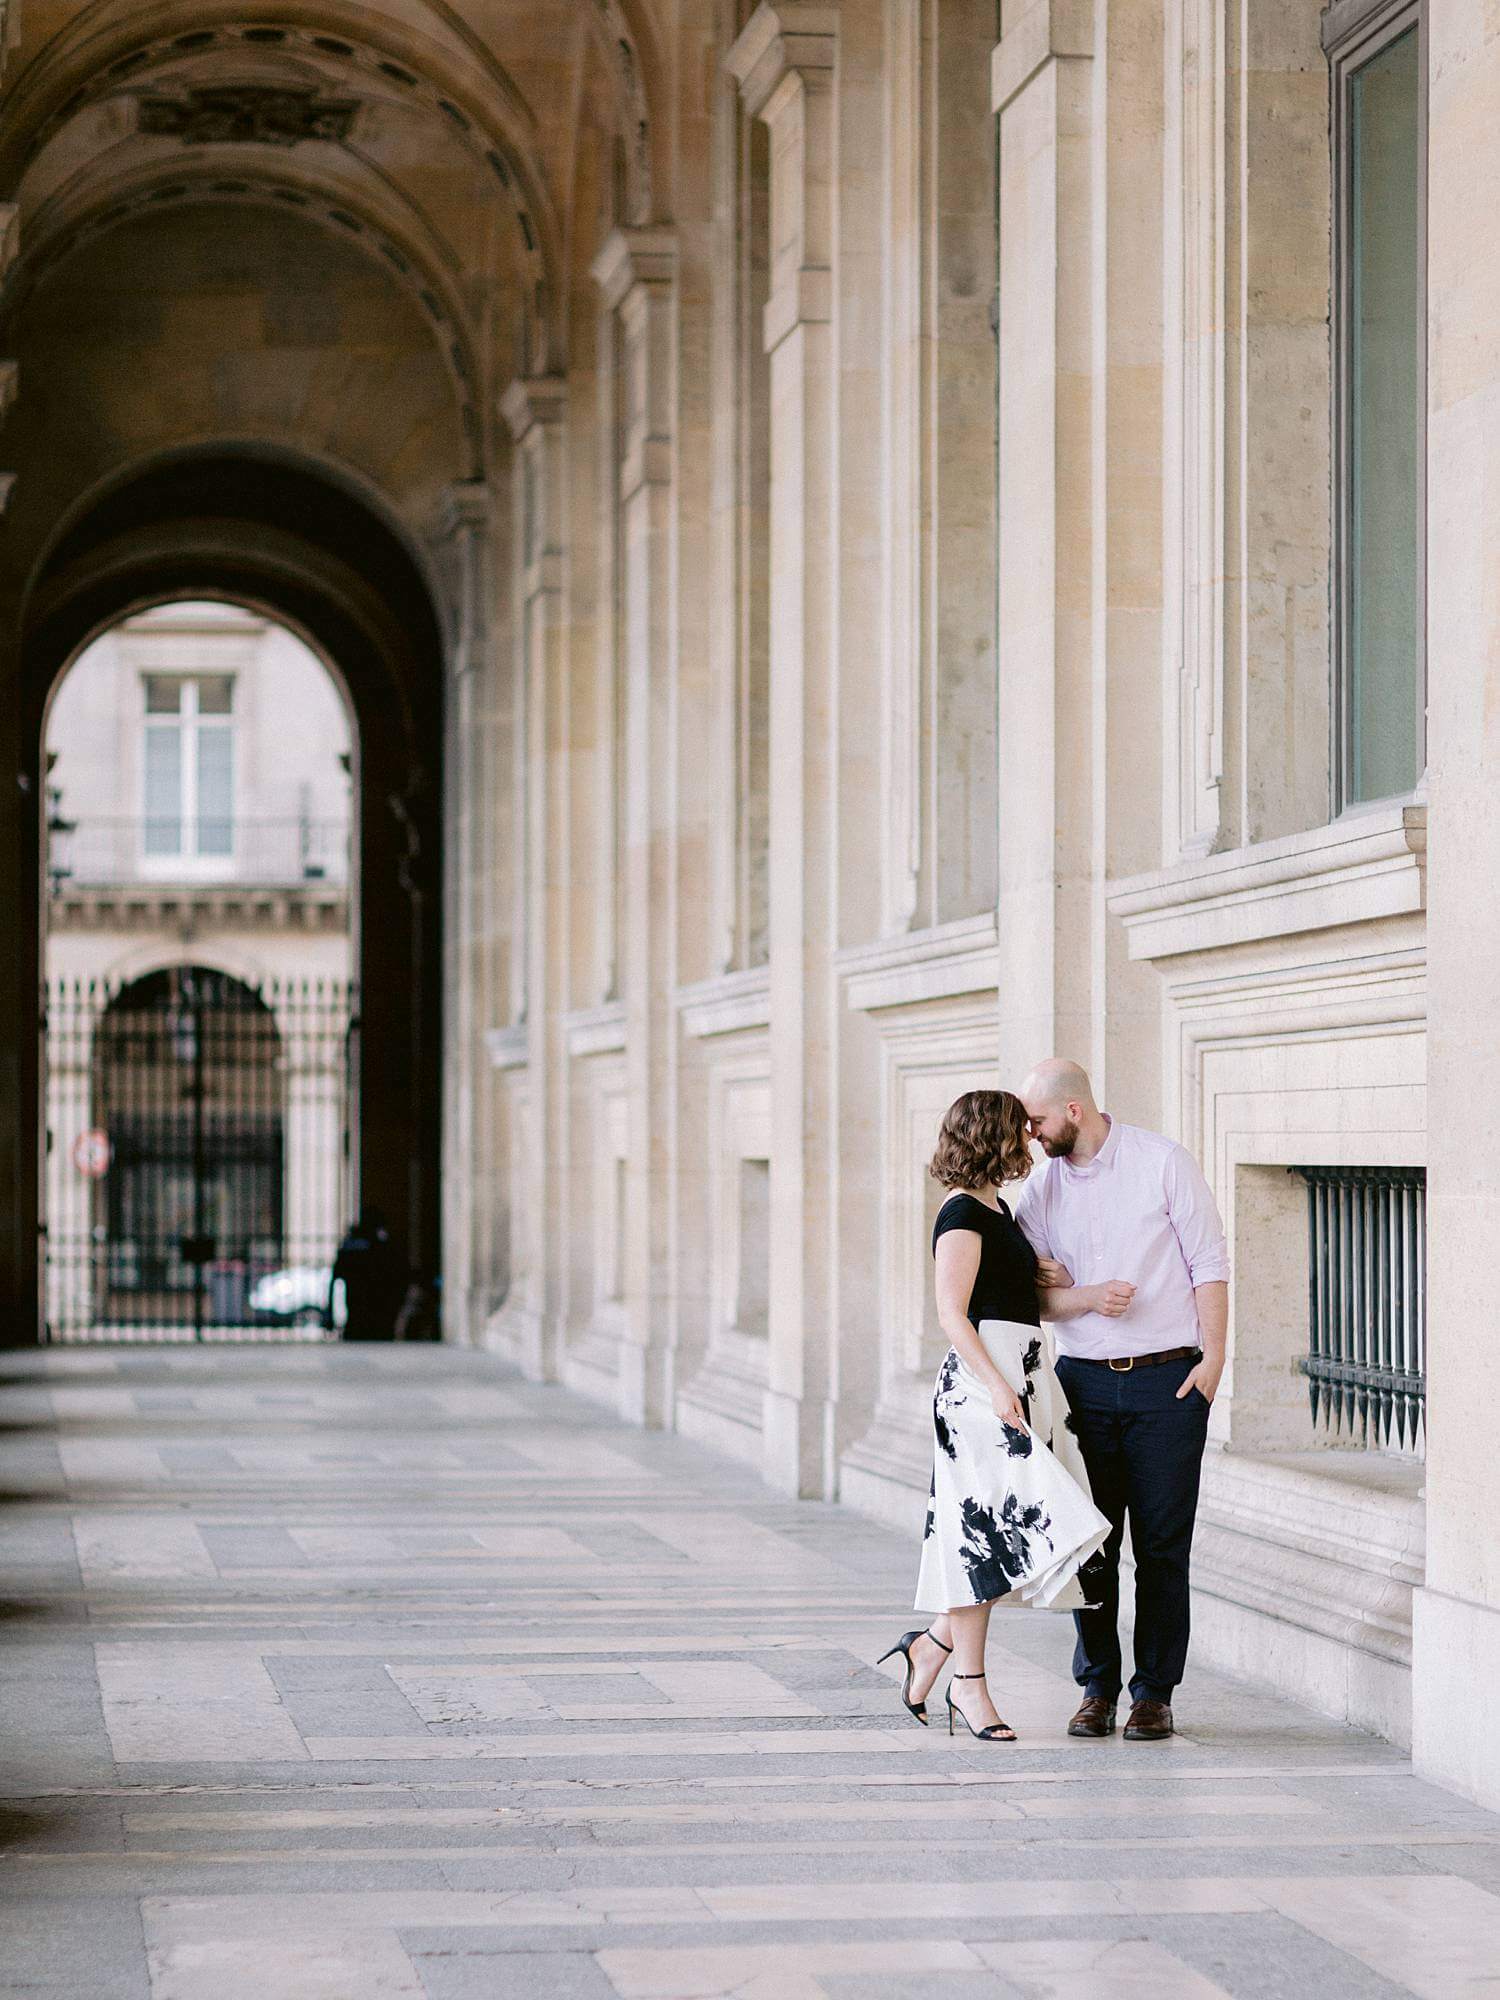 Couple walking through hallway of Louvre Museum